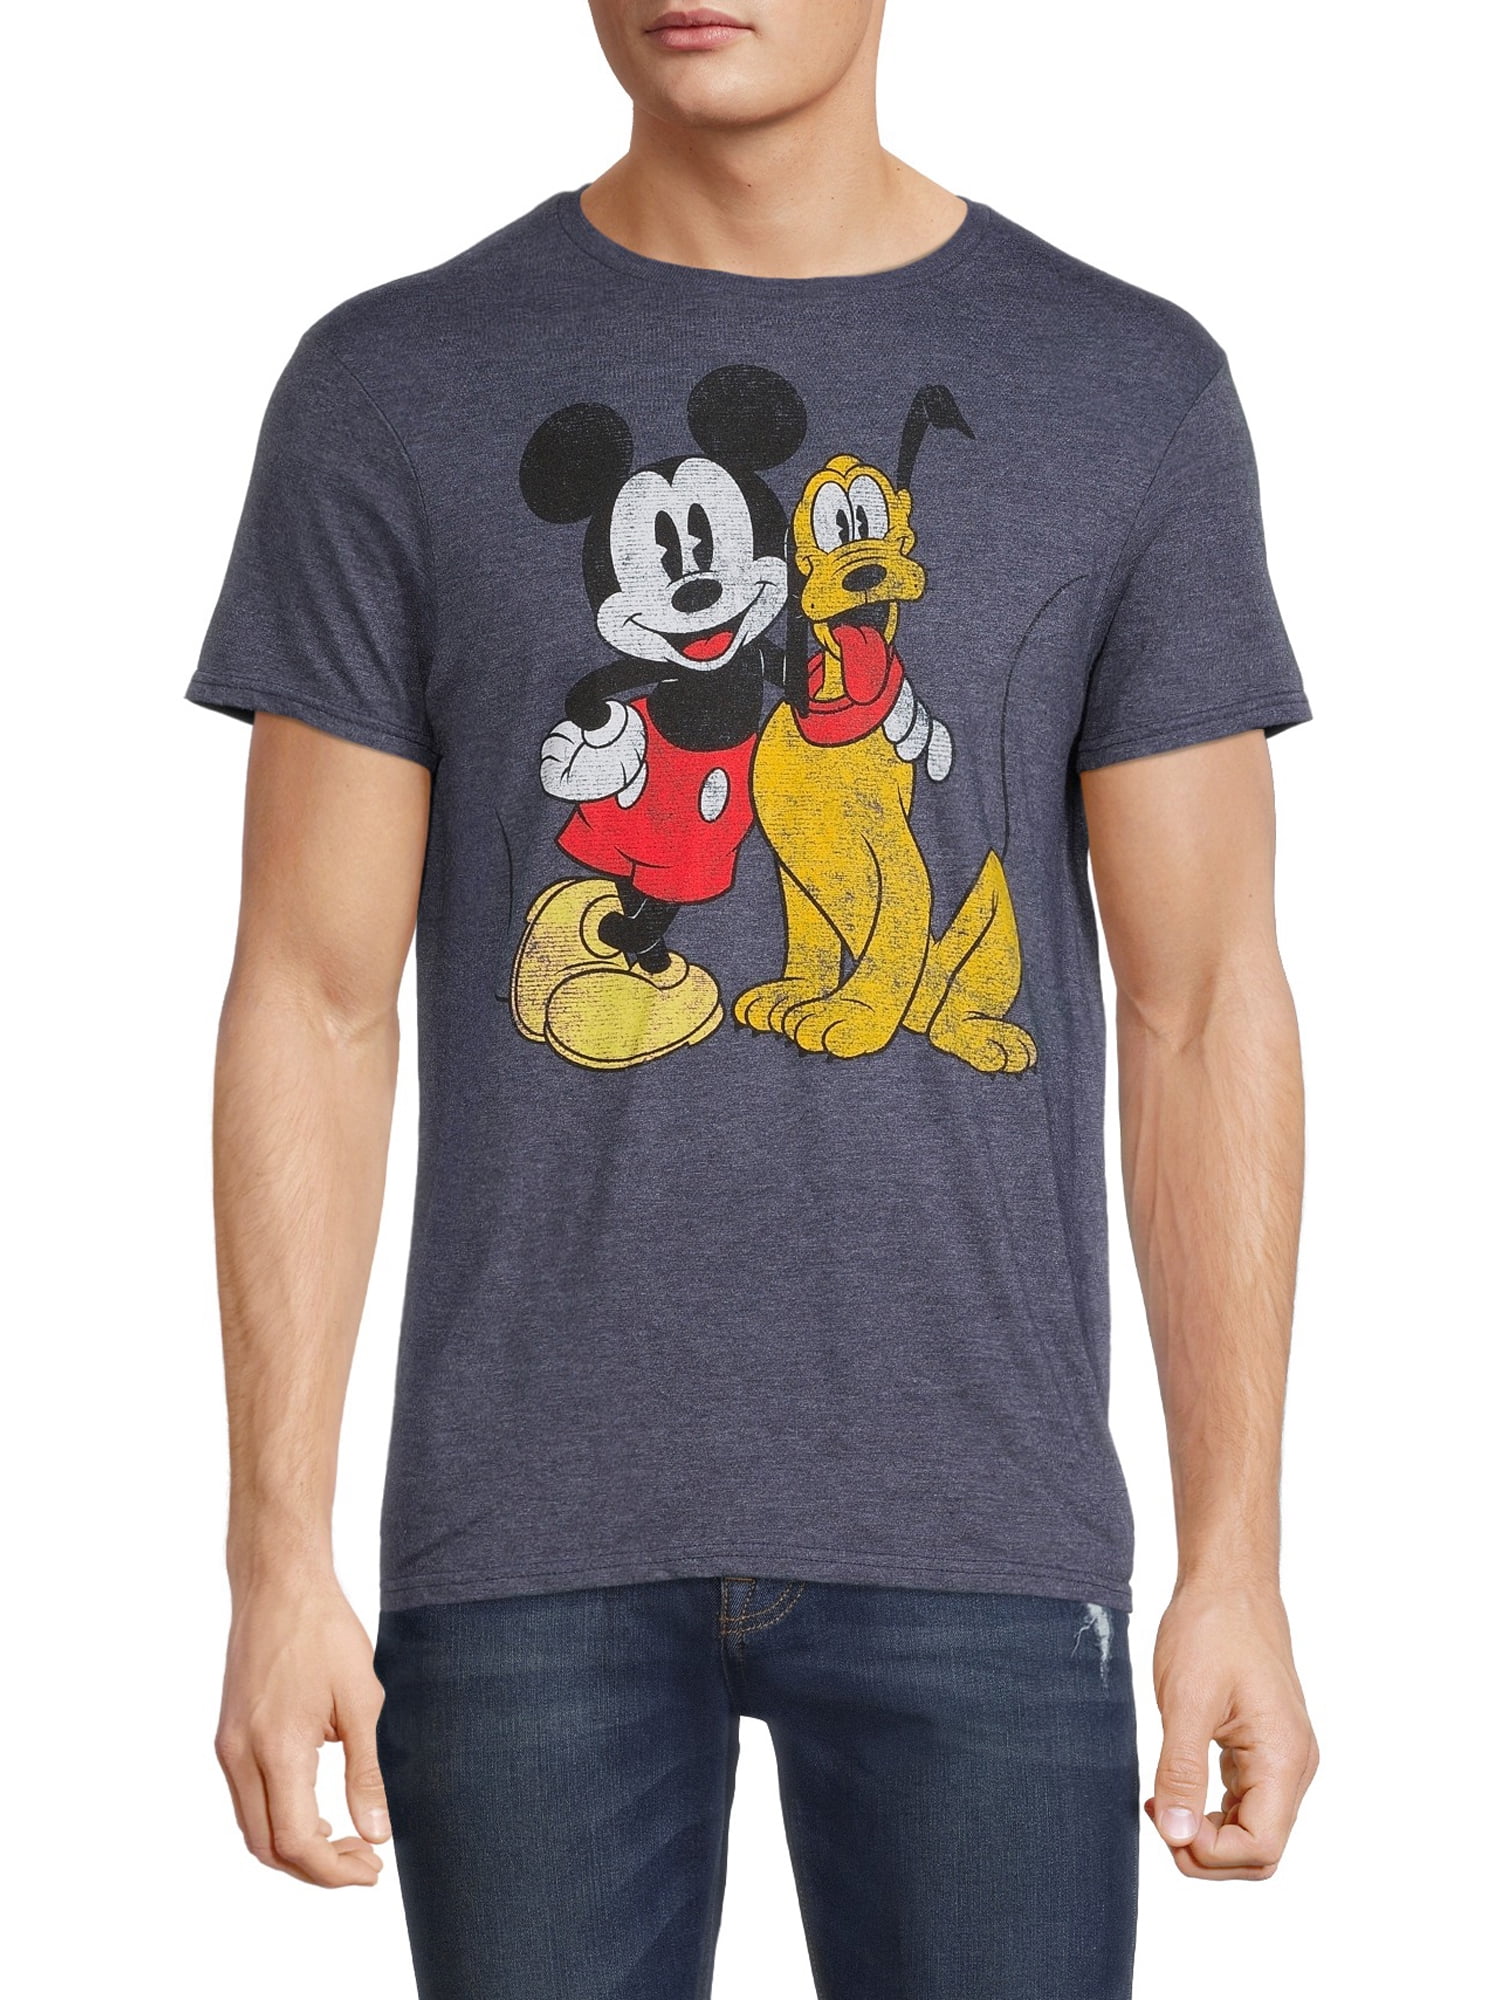 NBA Basketball LA Clippers Pluto Mickey Driving Disney Shirt T